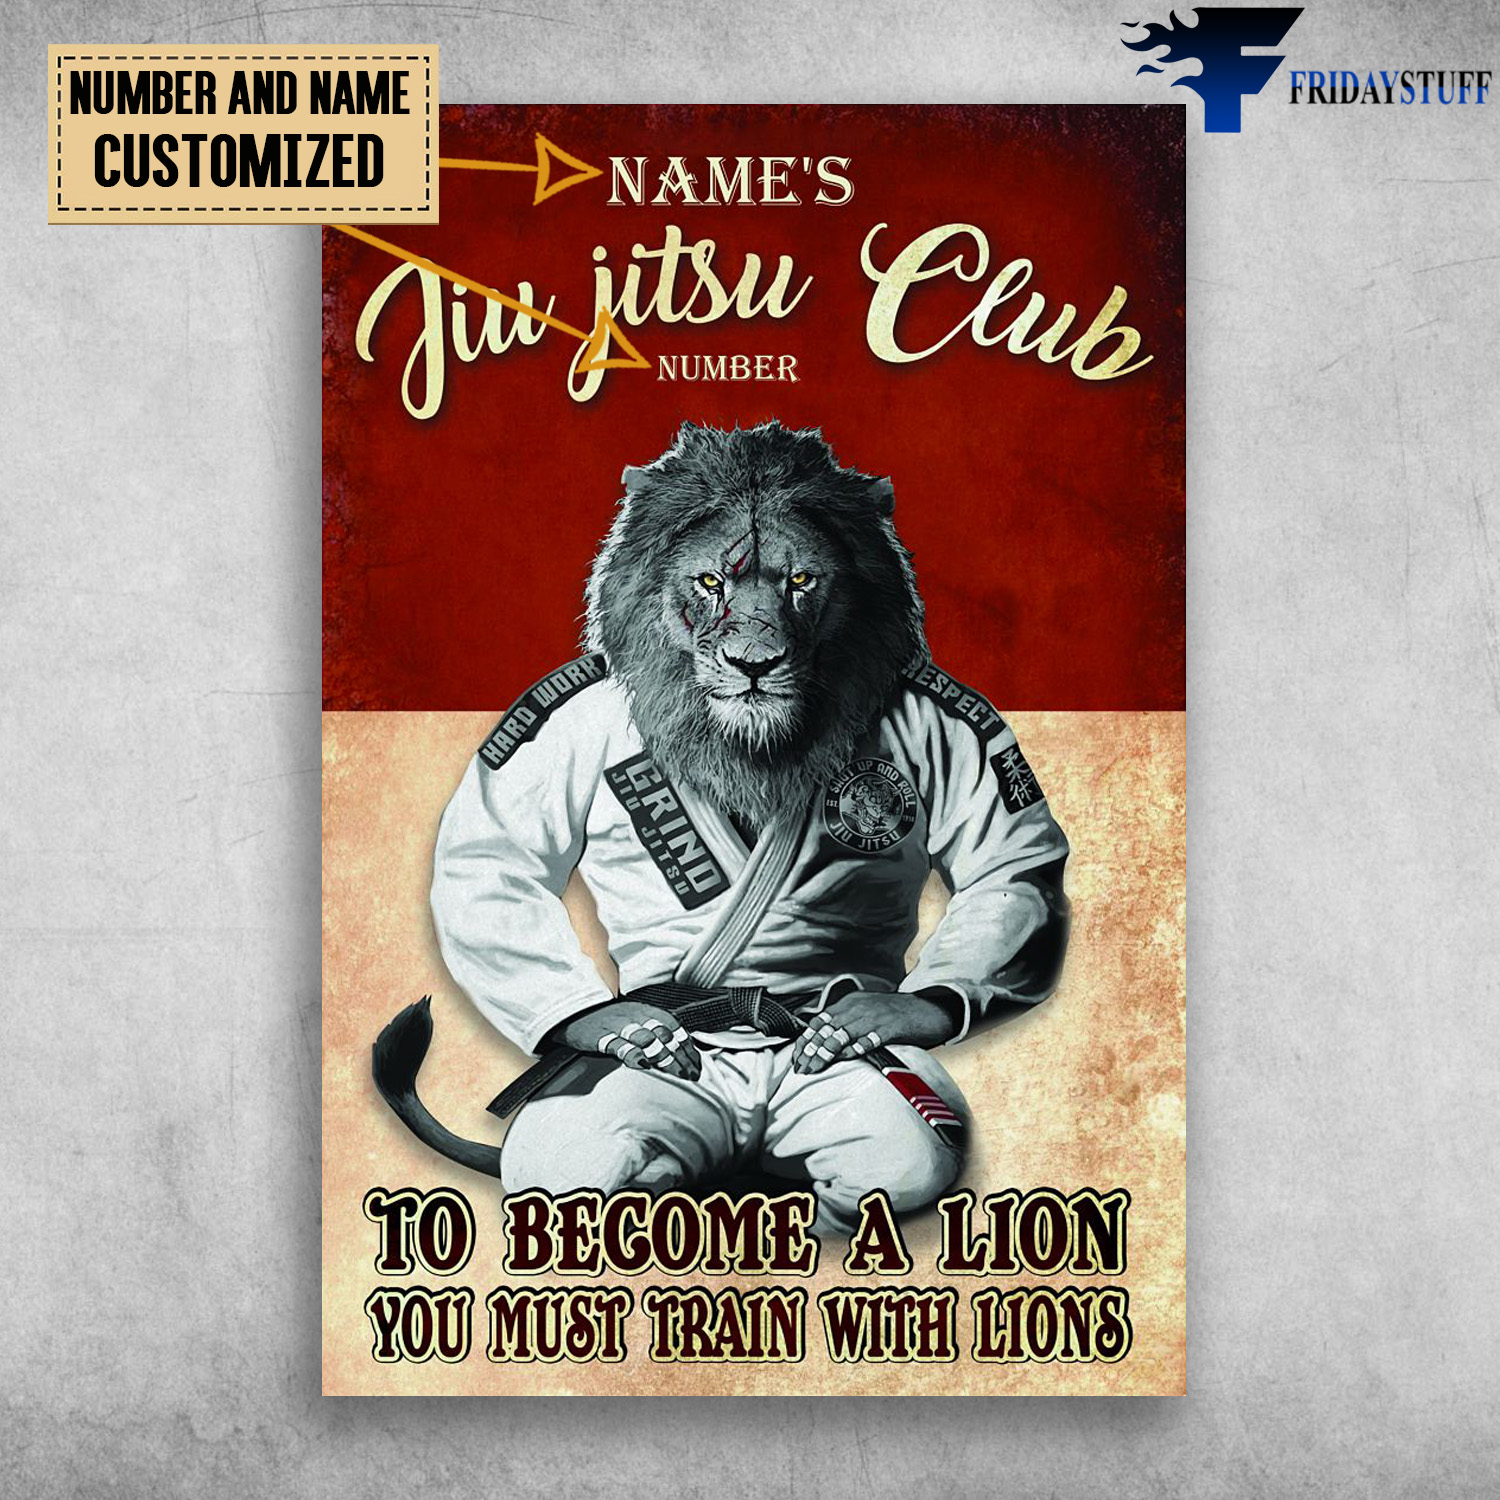 Jiu Jitsu Club, To Become A Lion, You Must Train With Lions